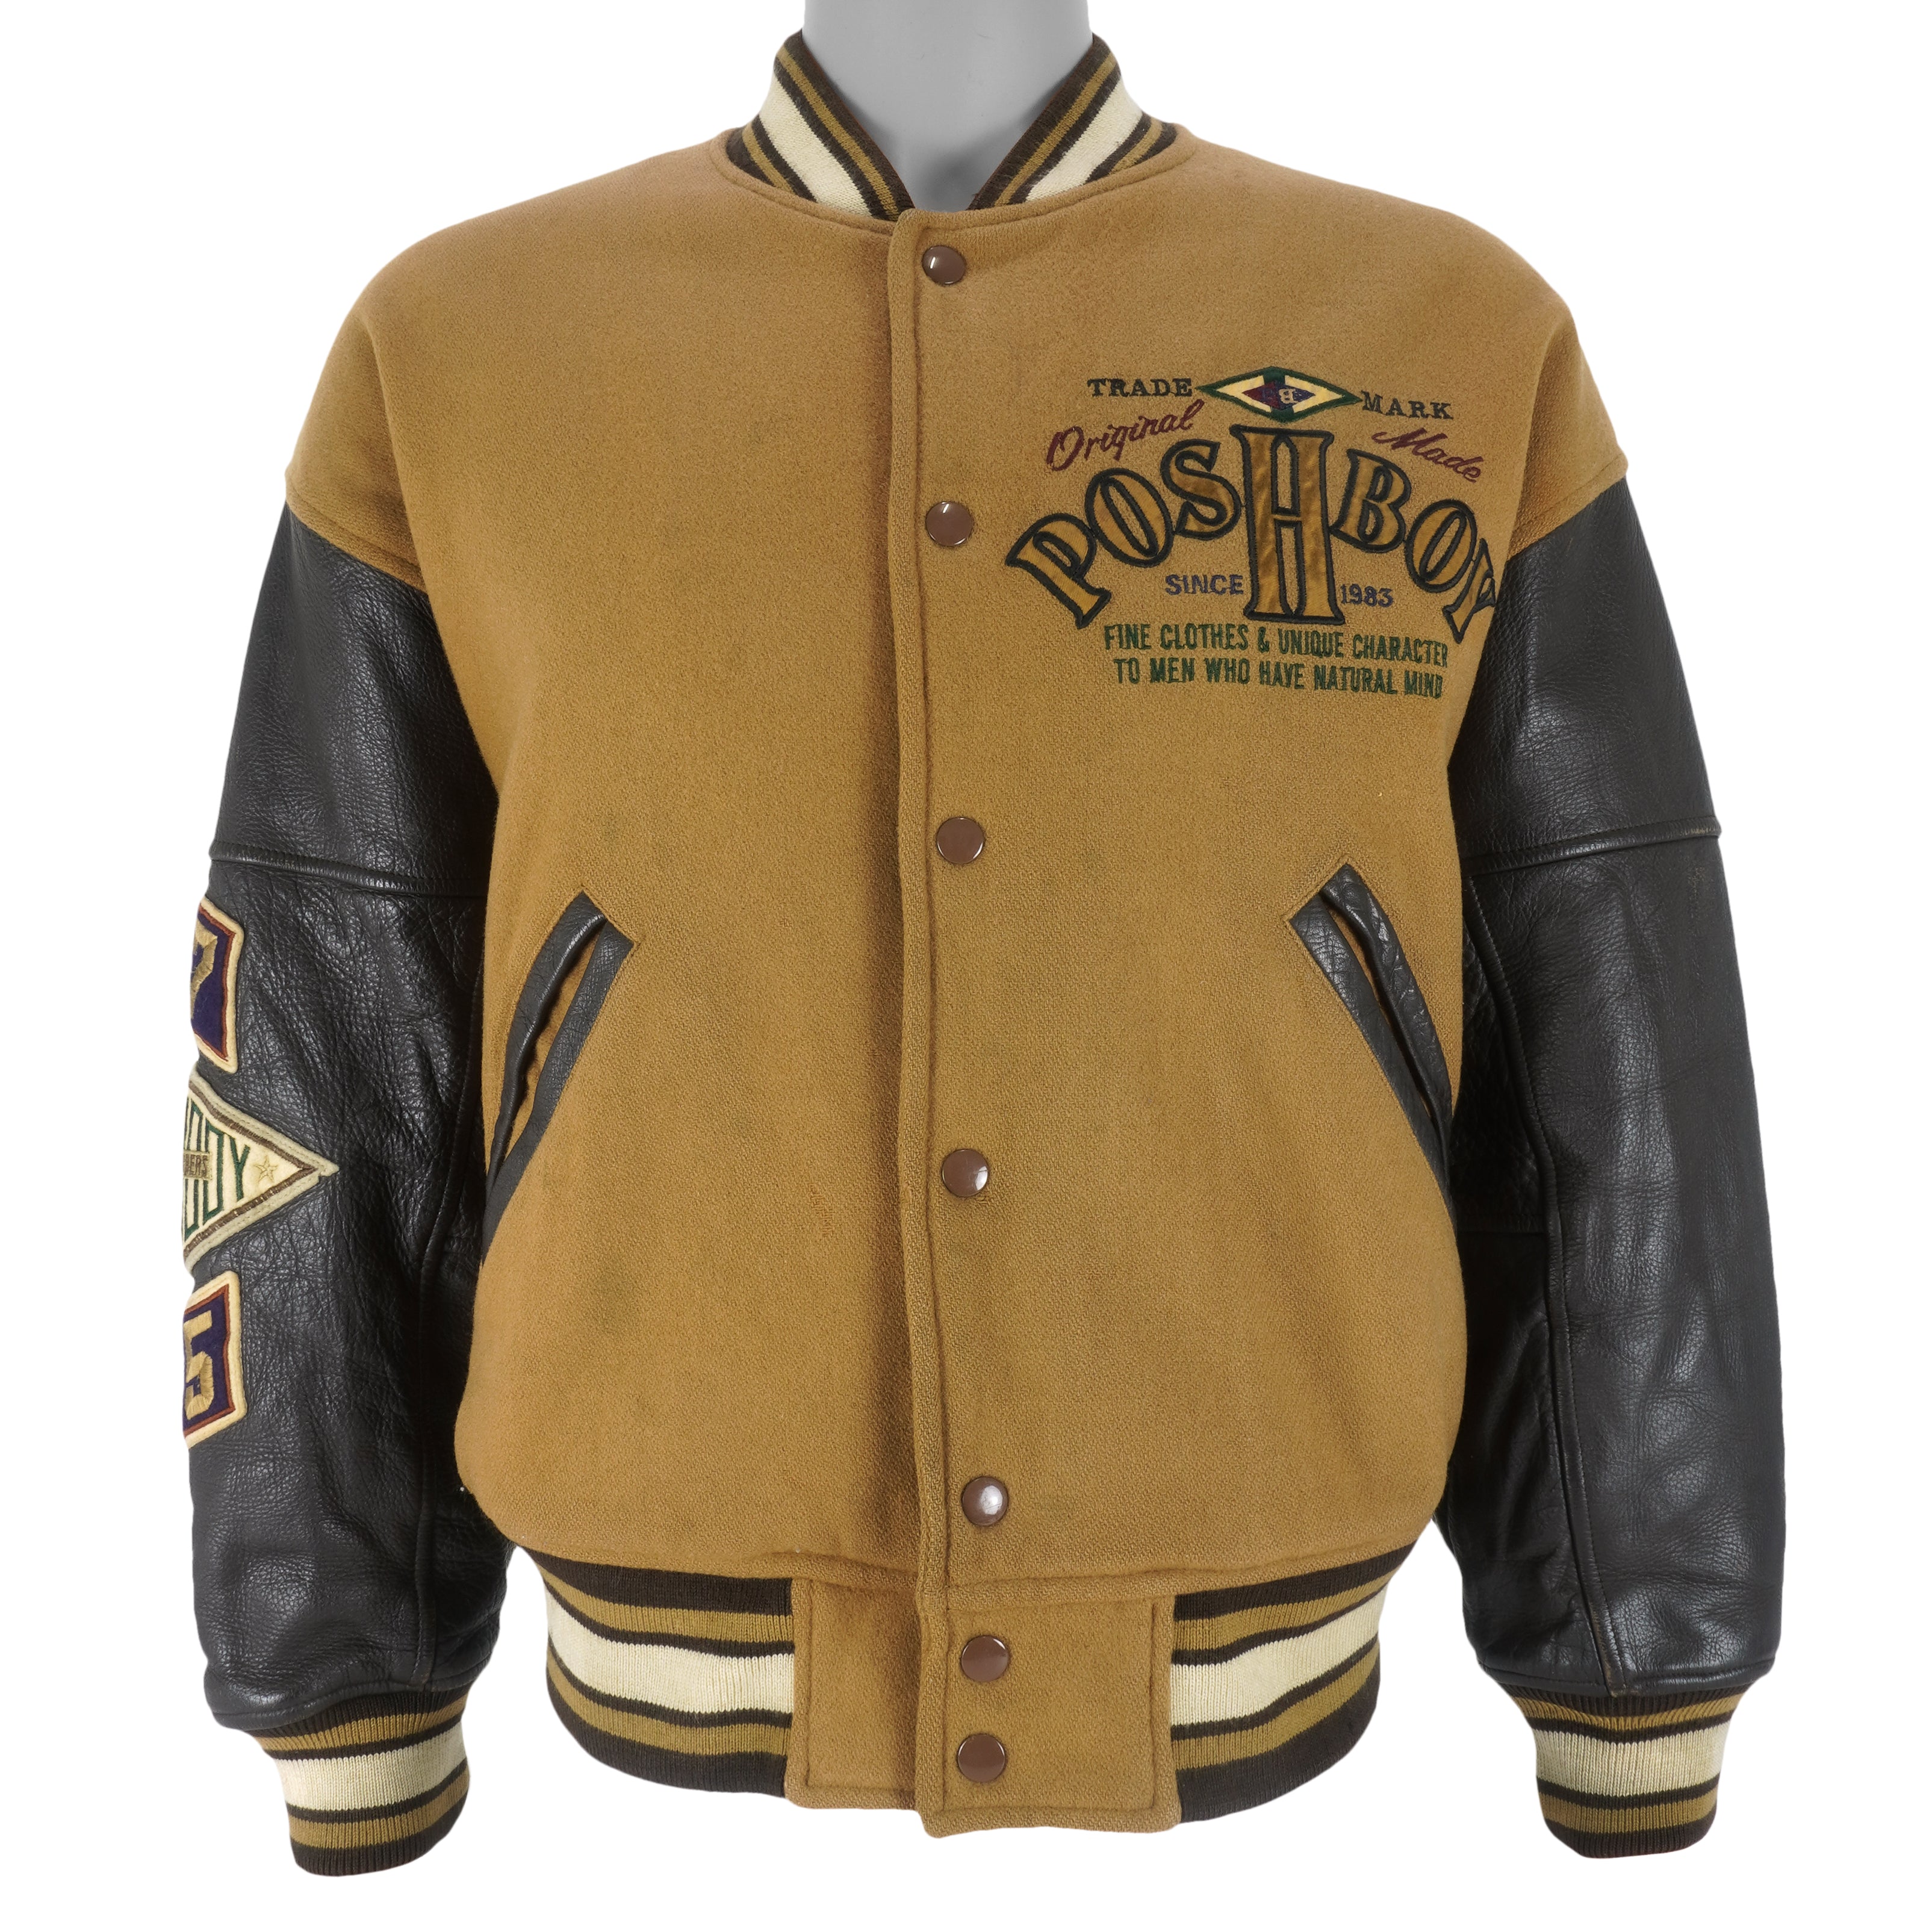 Vintage - Posh Boy Fine Clothing Leather Varsity Jacket 1980s